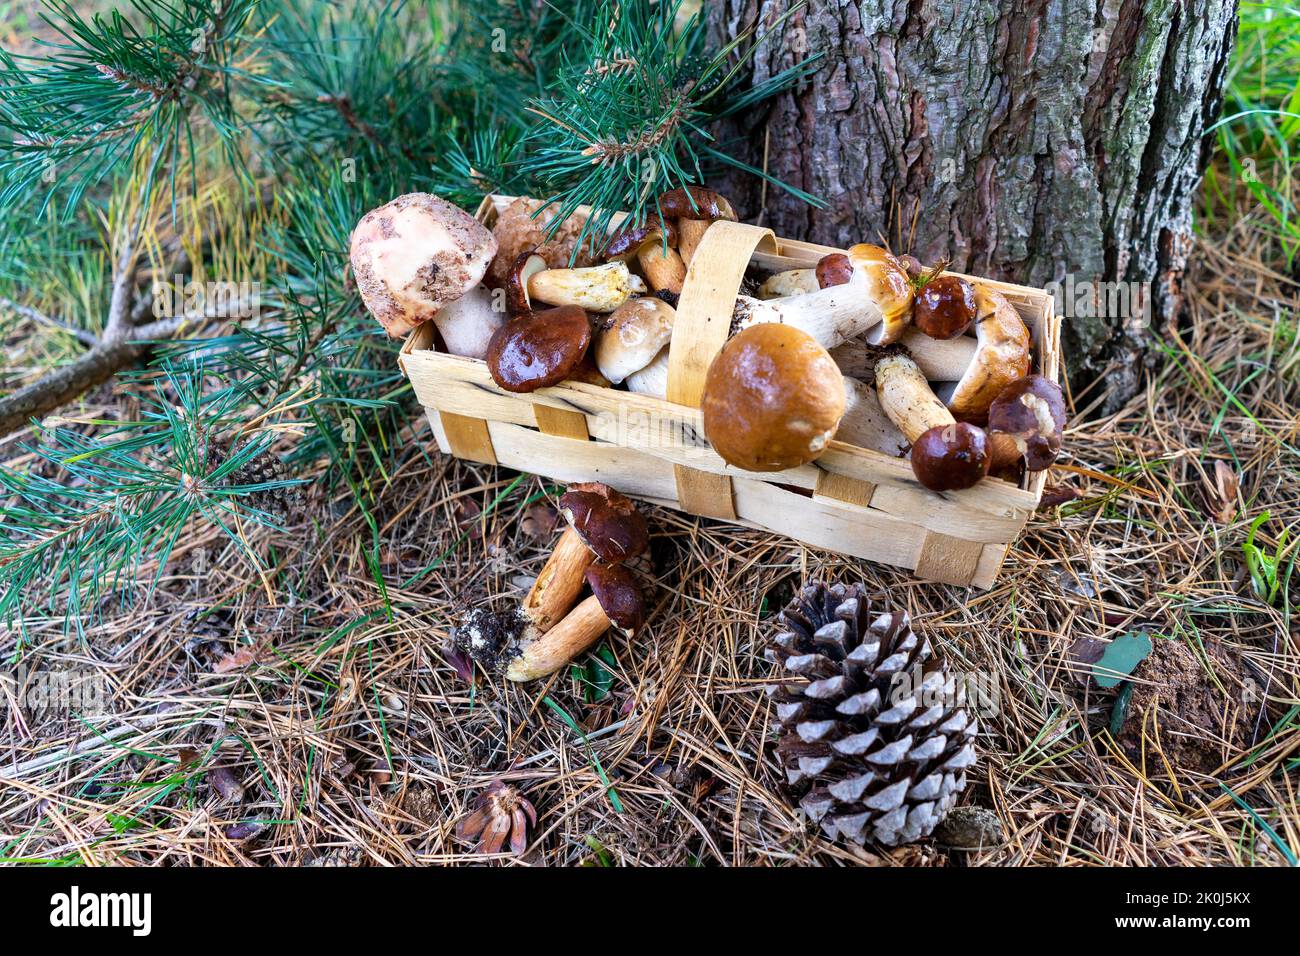 Picking mushrooms in a basket Stock Photo